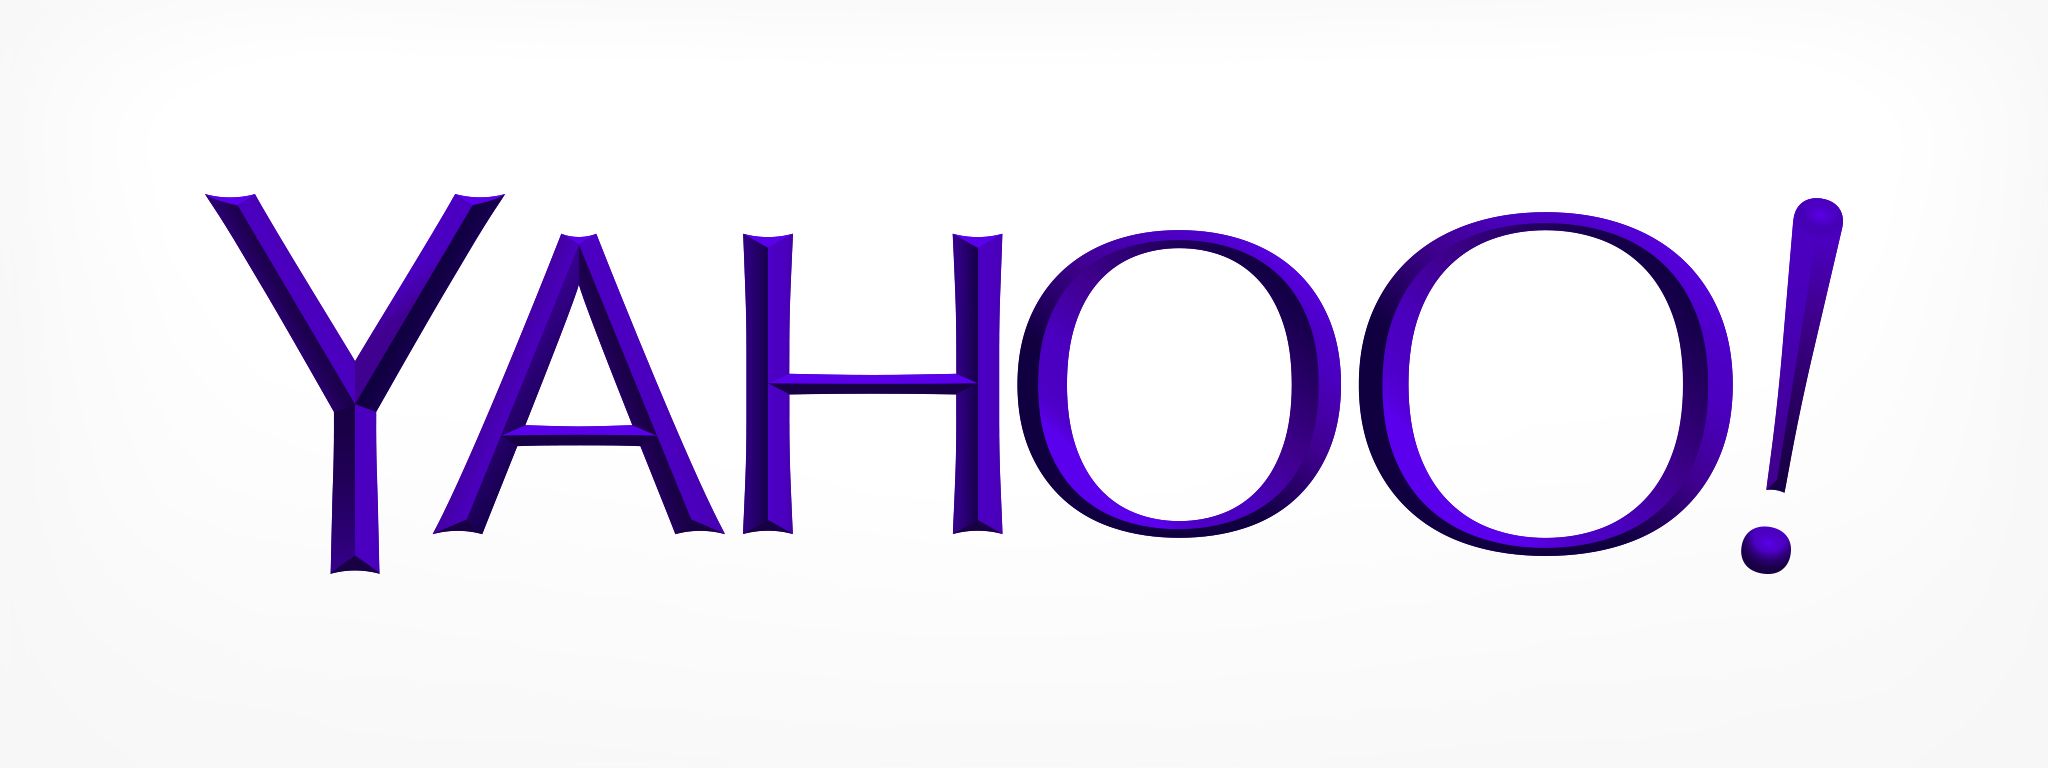 Novo logo - Yahoo!